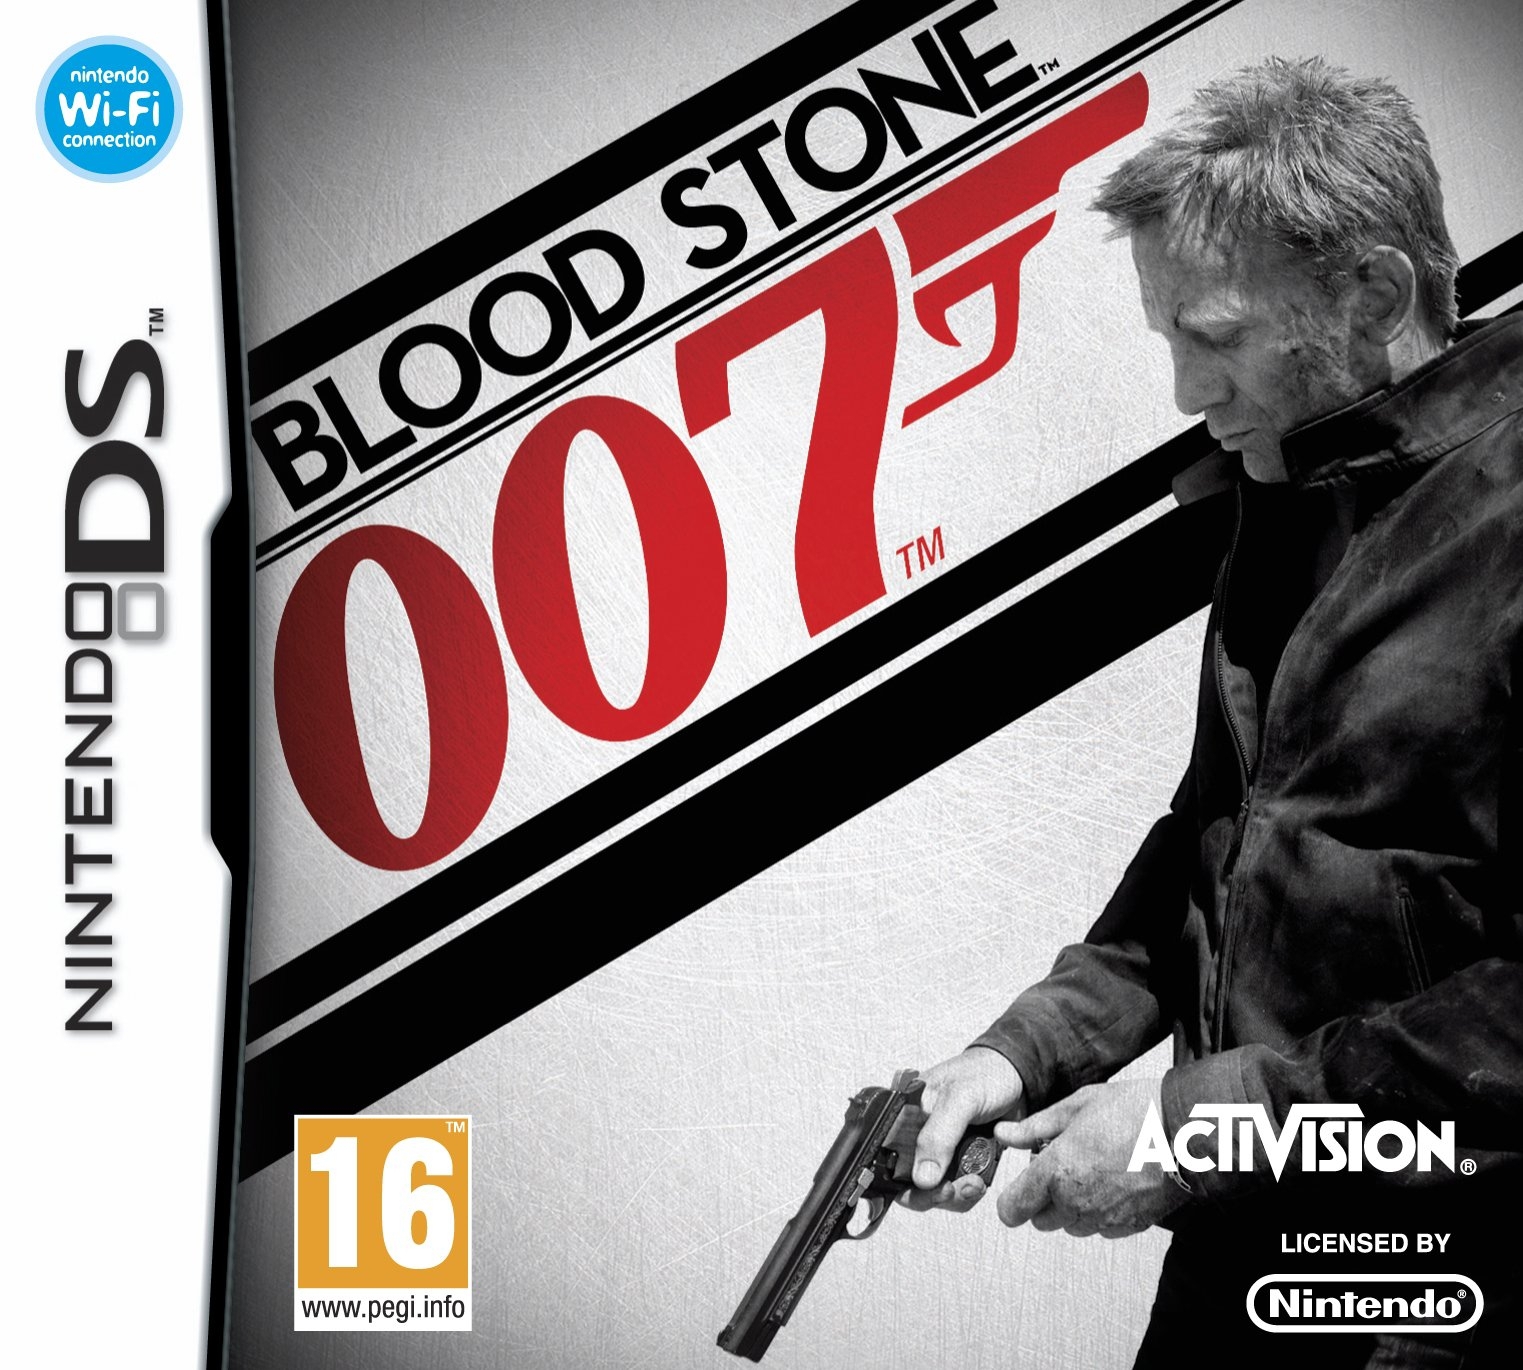 Boxshot James Bond 007: Blood Stone